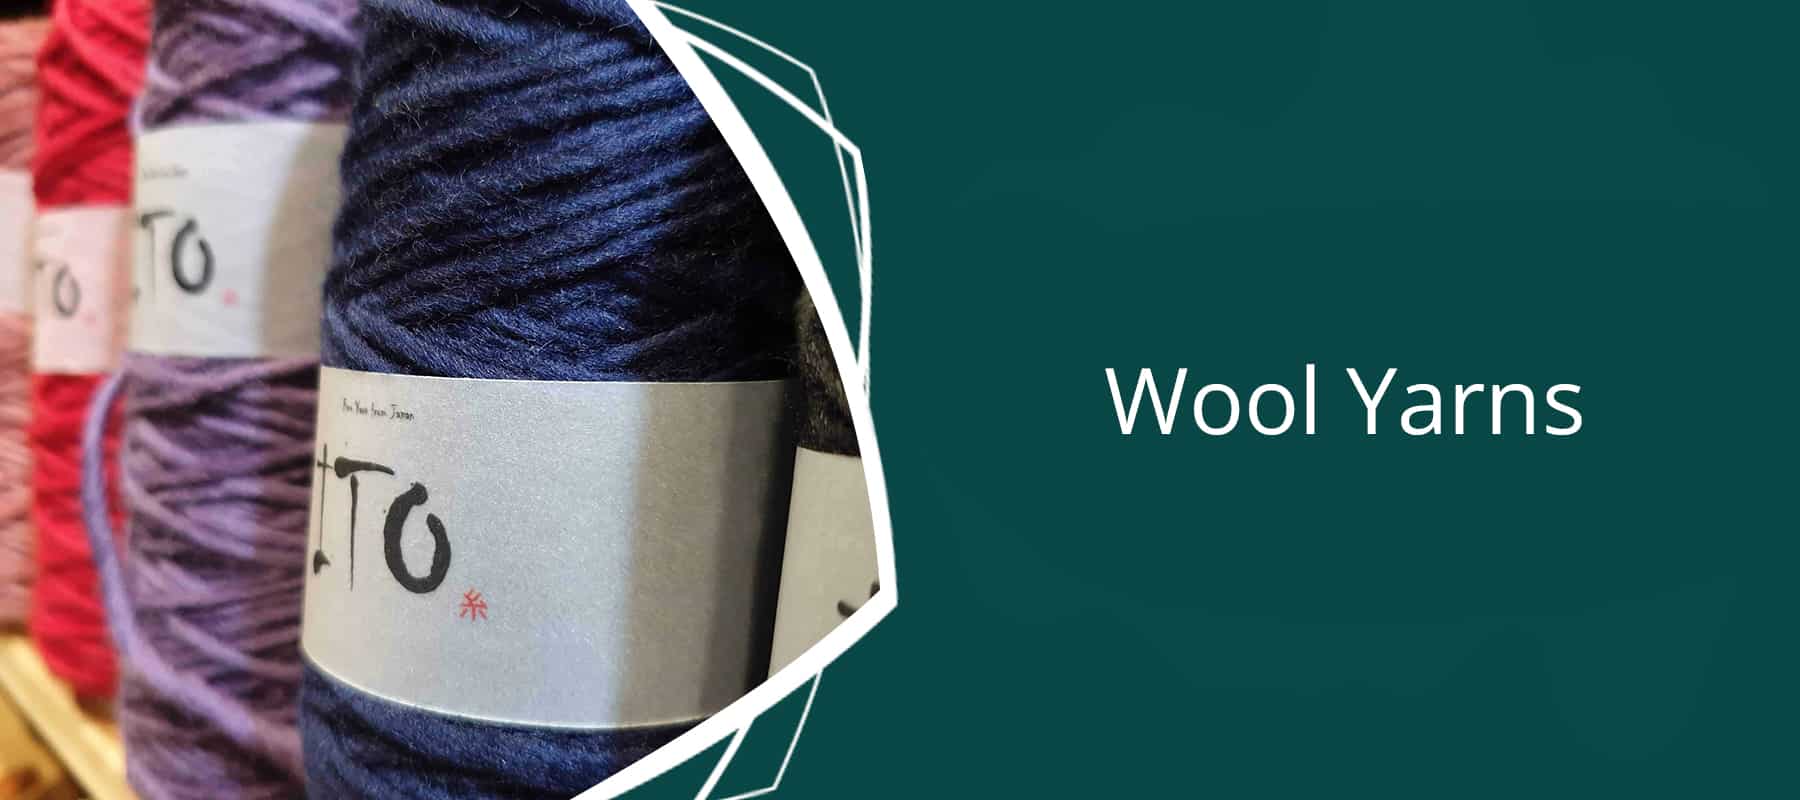 ITO Wool Yarns - Thread Collective Australia 